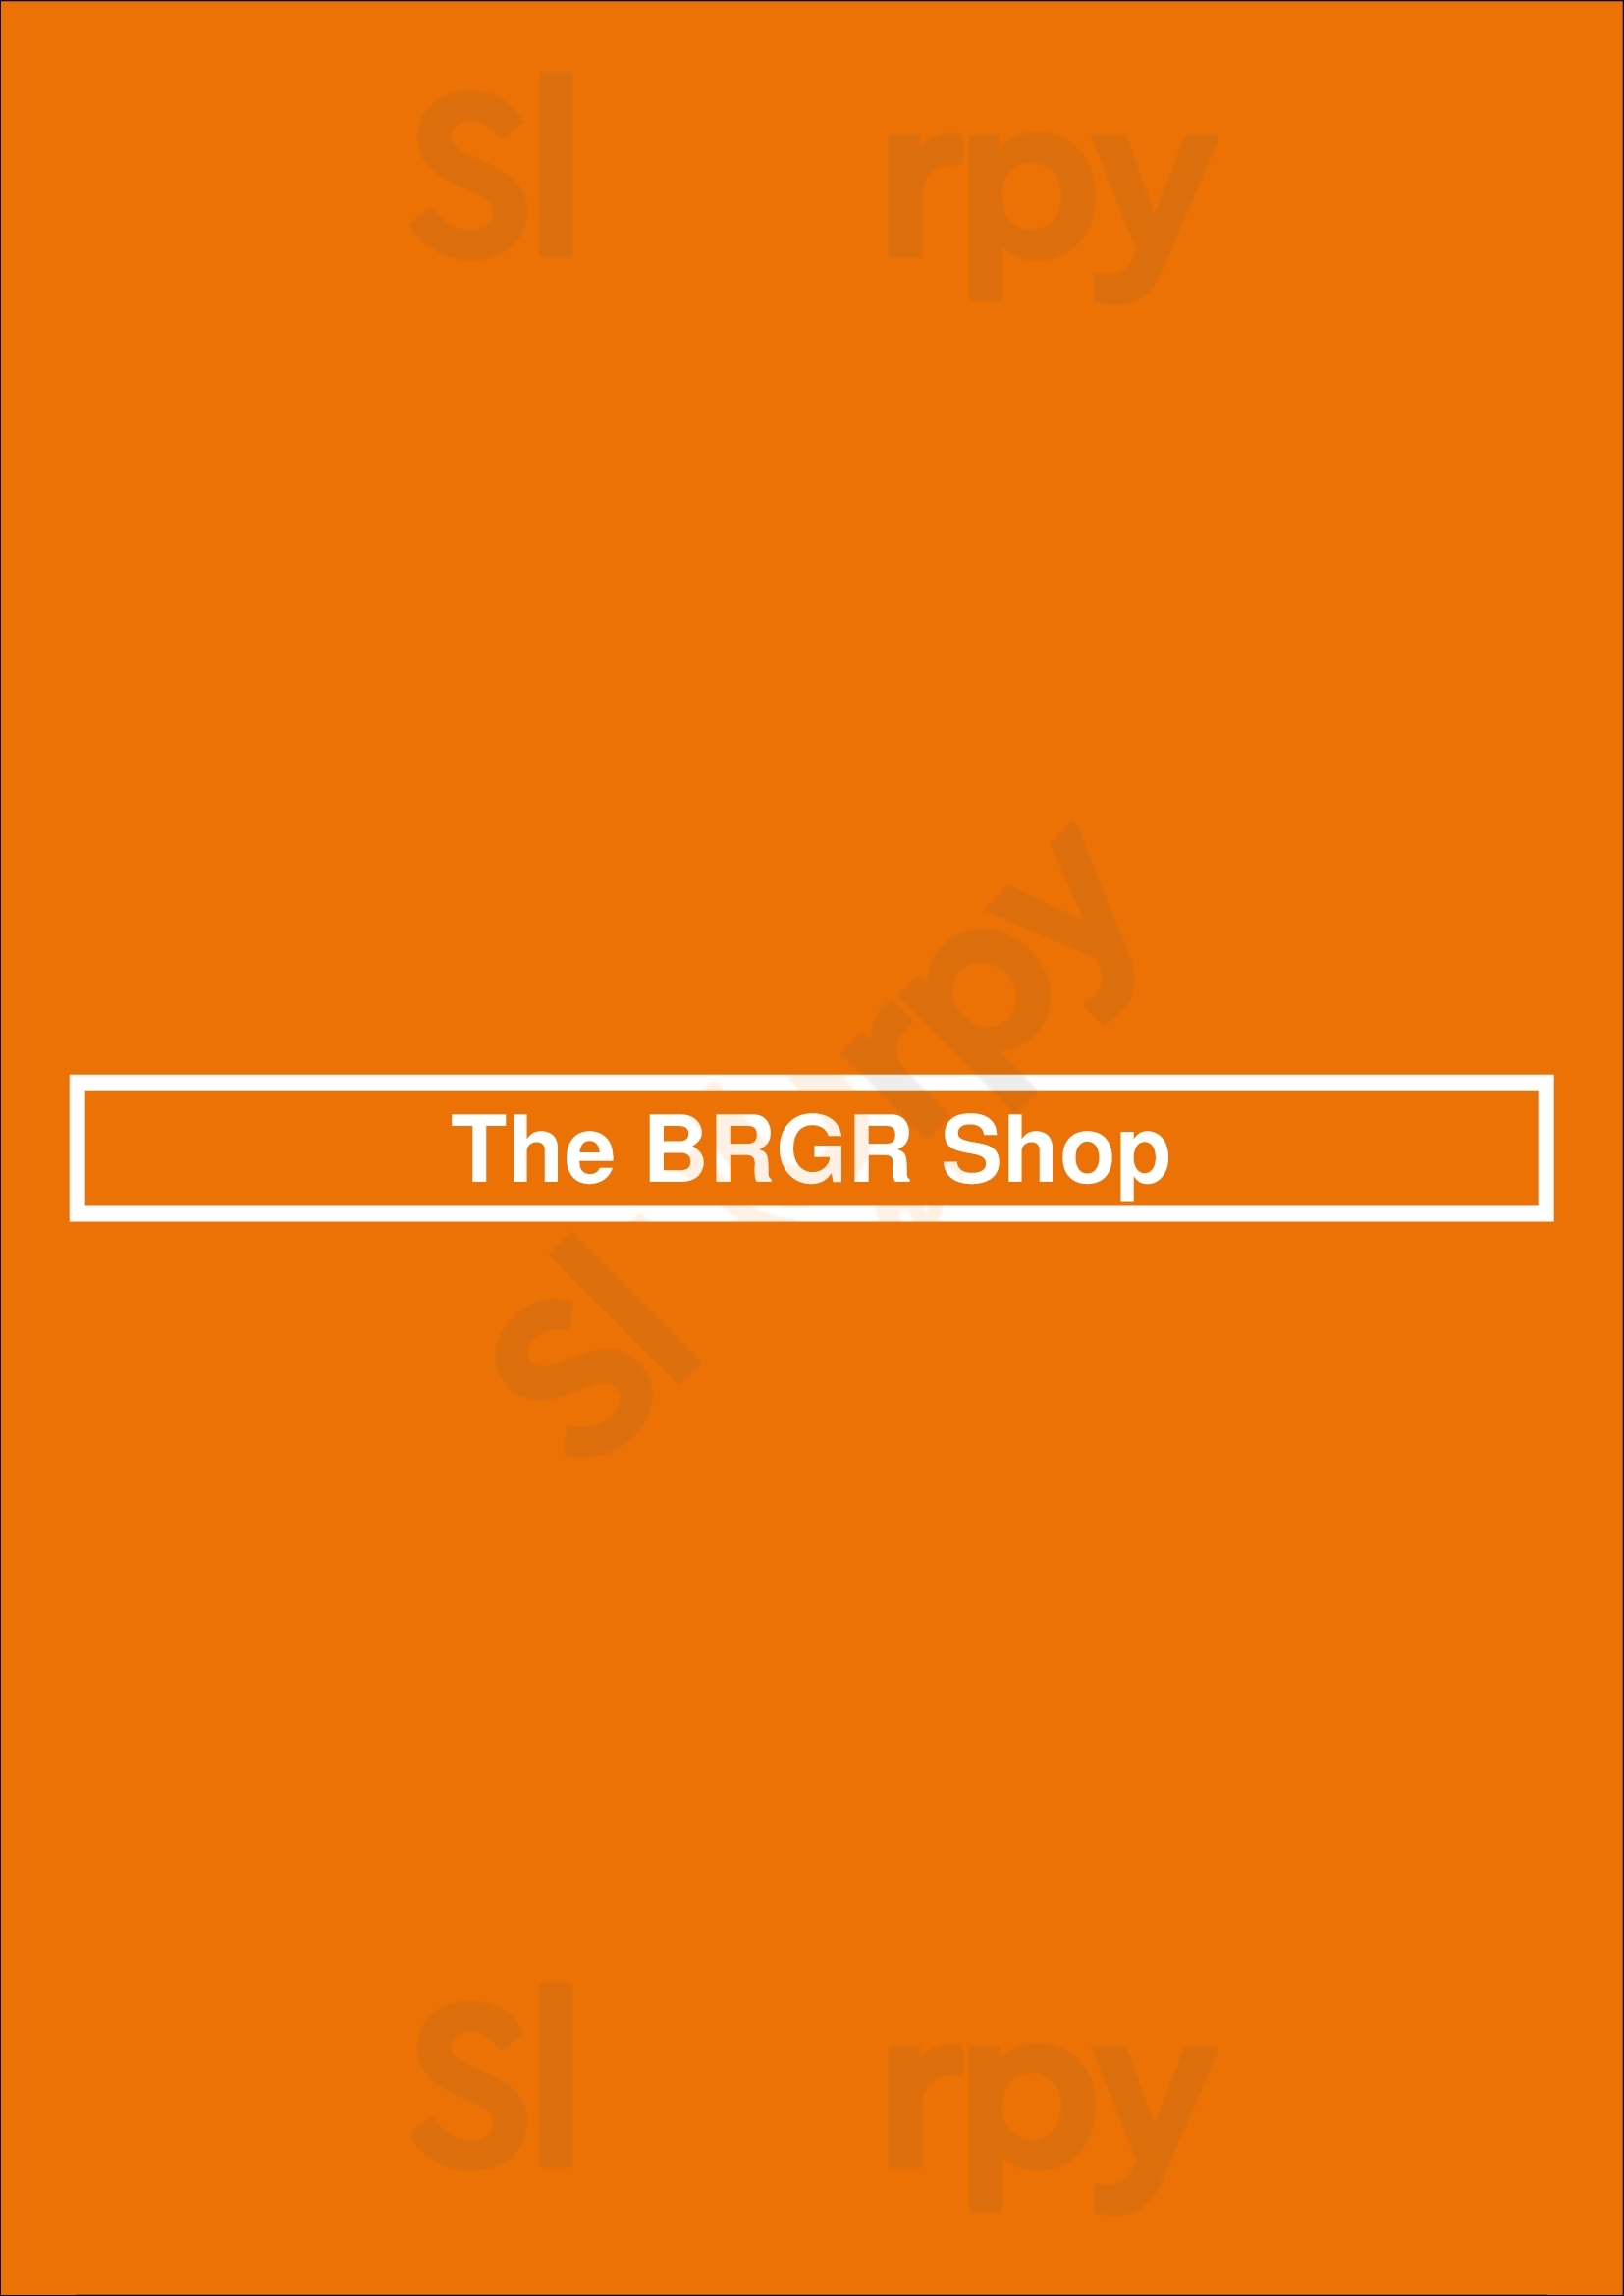 The Brgr Shop San Juan Menu - 1